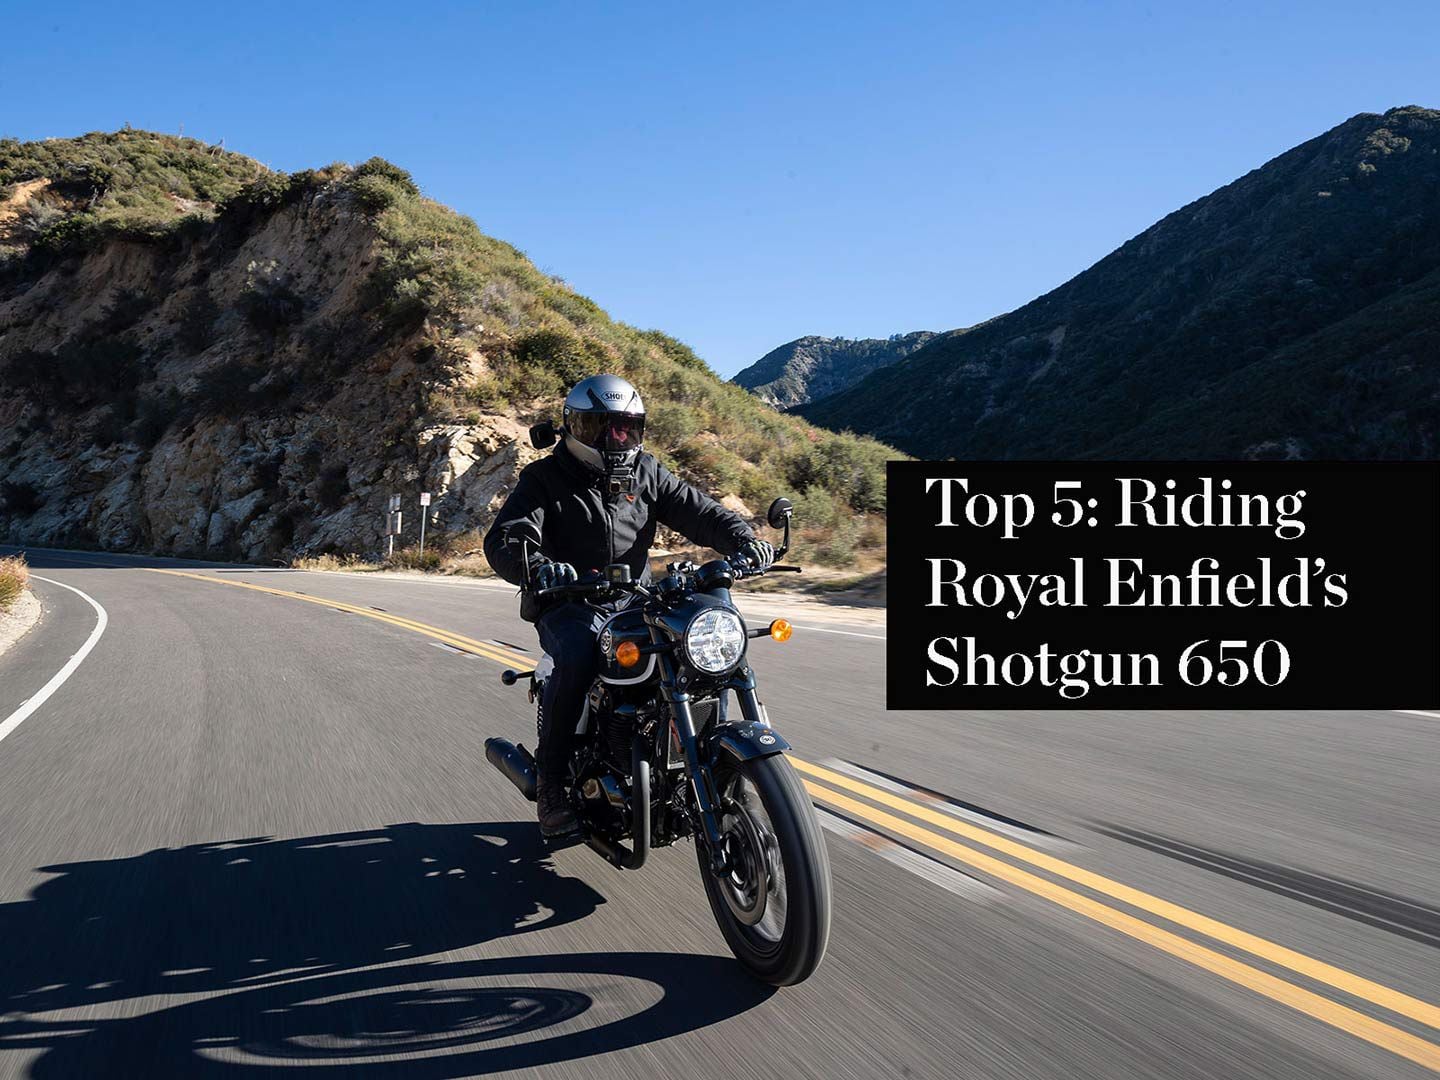 Top 5 Reasons We Like Riding Royal Enfield's Shotgun 650 – Motorcyclist